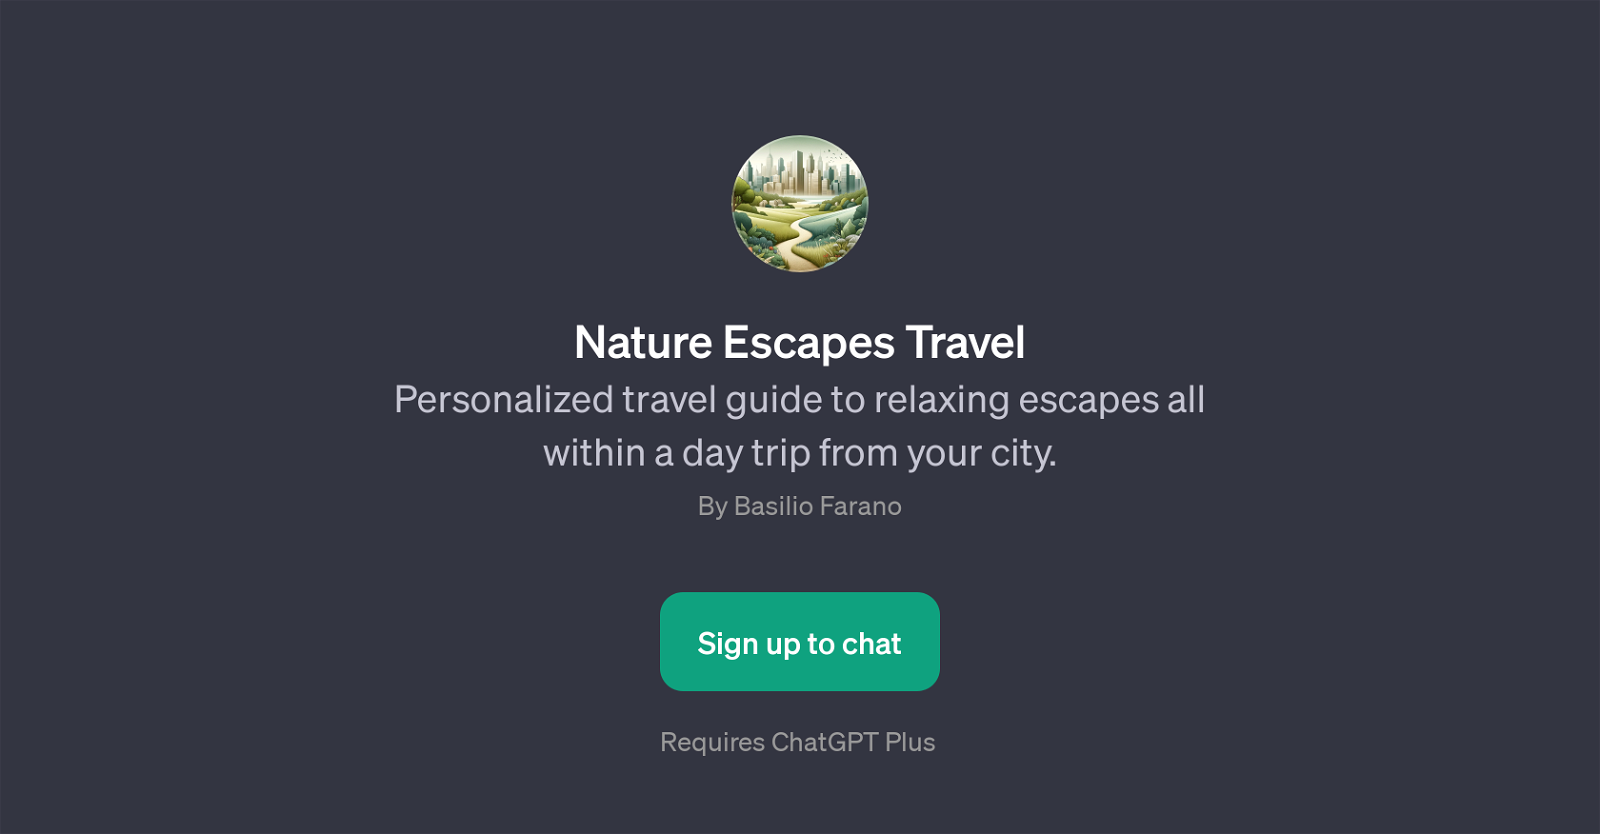 Nature Escapes Travel website